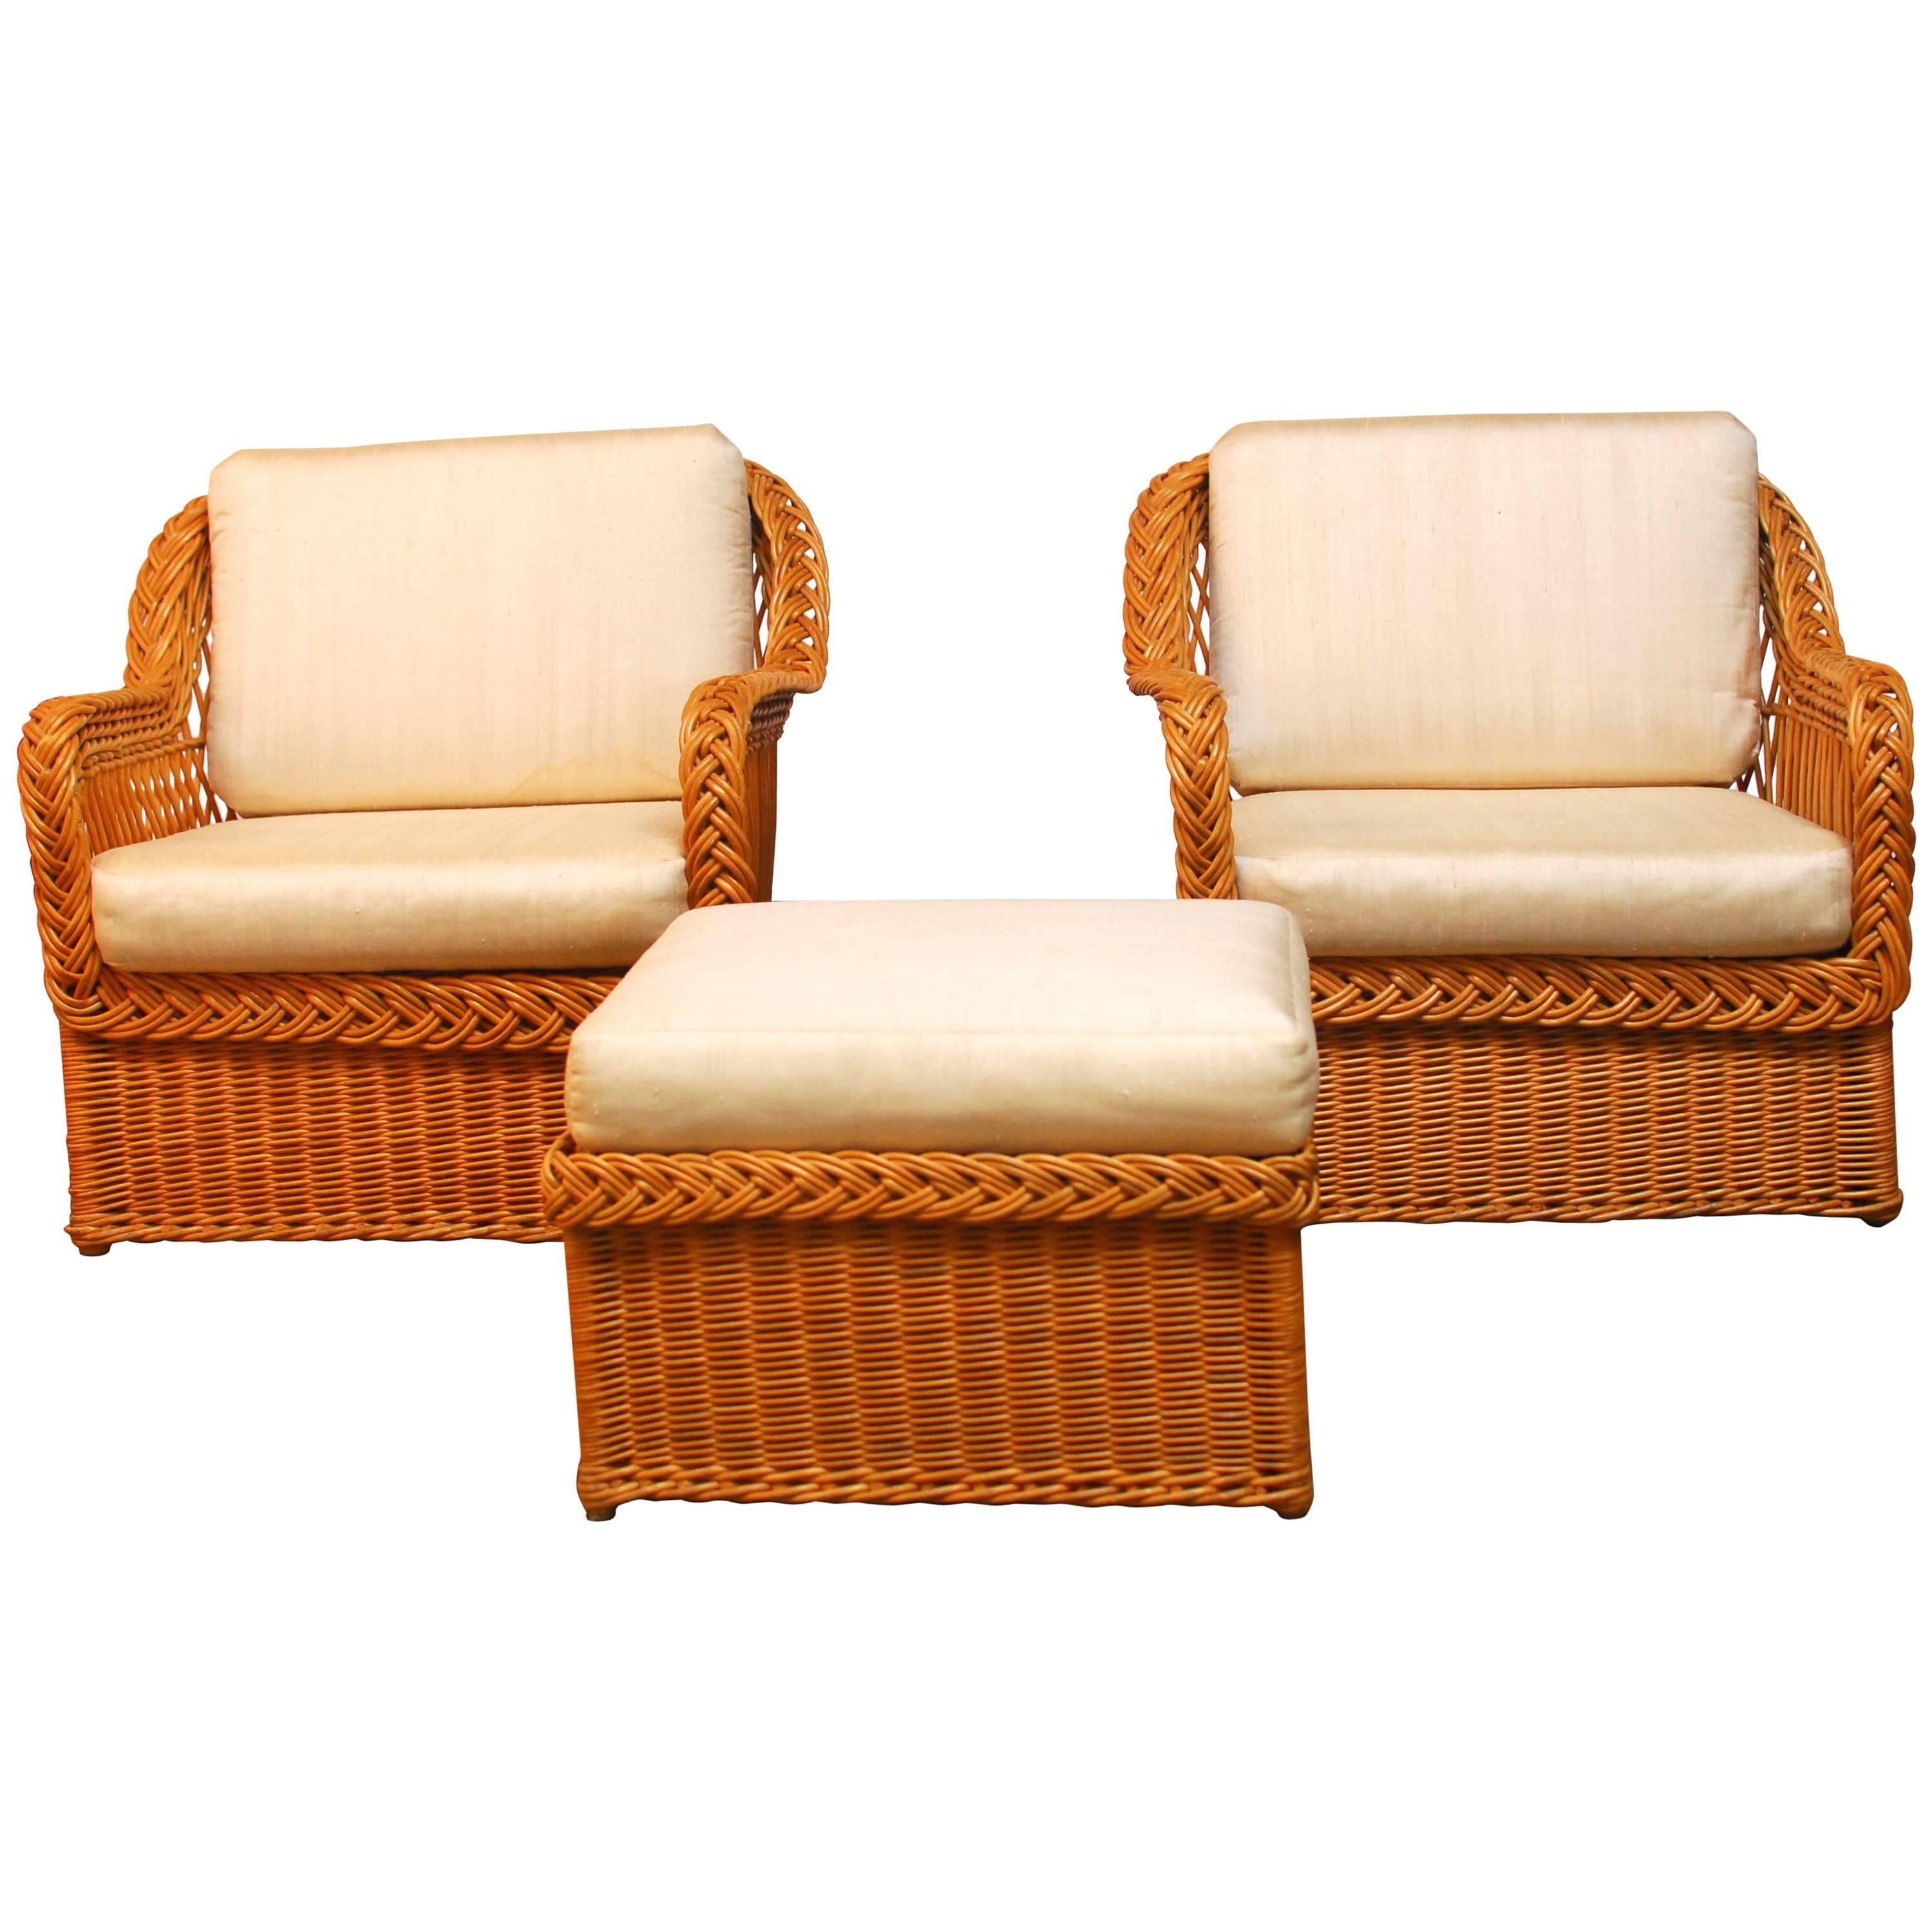 Italian Braided Wicker Rattan Lounge Chairs and Ottoman